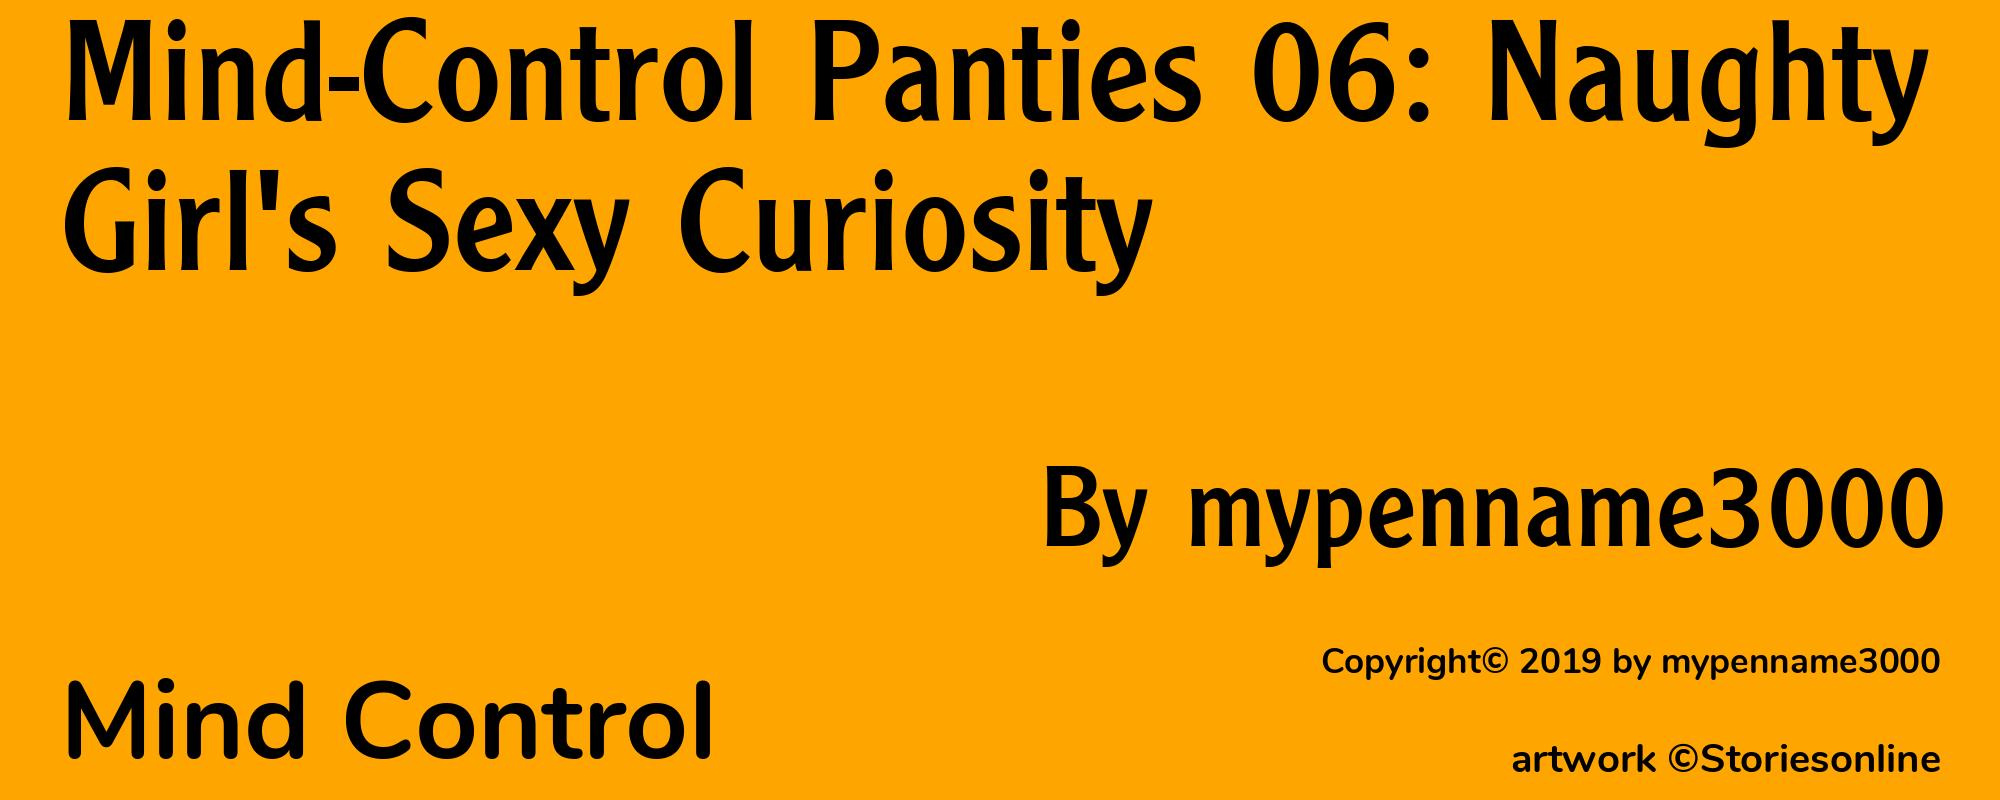 Mind-Control Panties 06: Naughty Girl's Sexy Curiosity - Cover